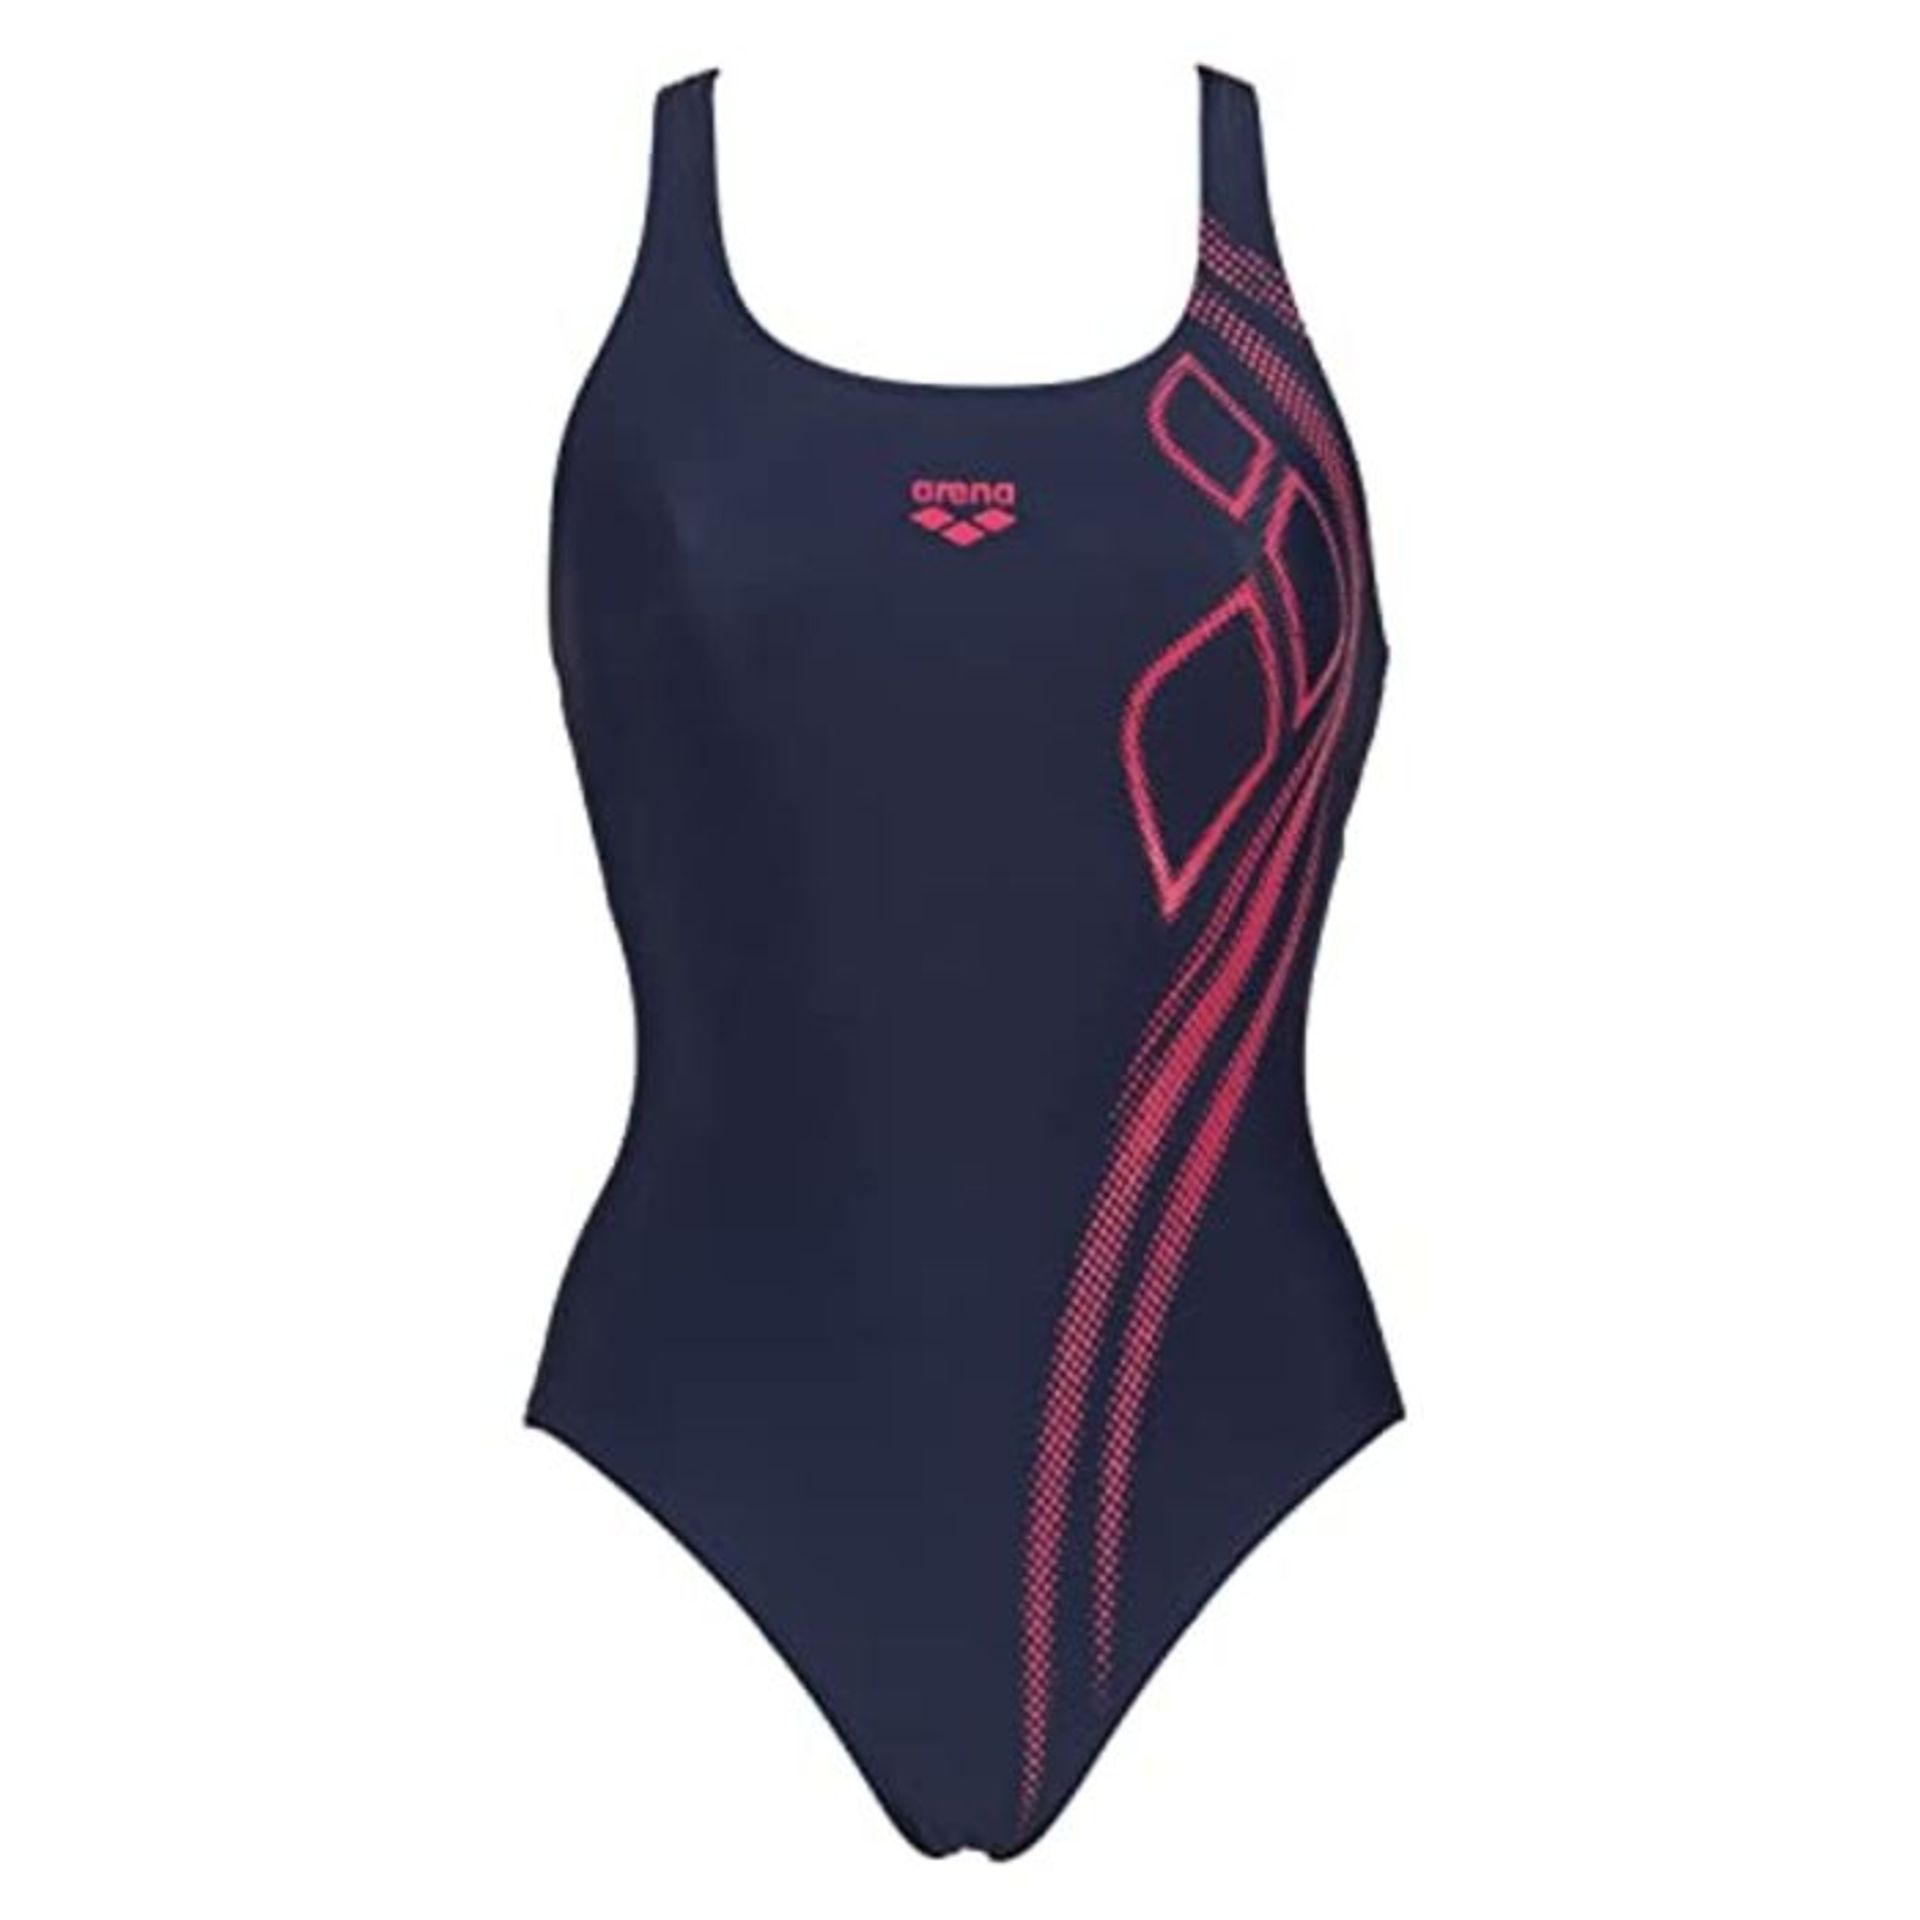 Arena Women's Spirit Swim Pro Swimsuit, Navy-Freak Rose, 44